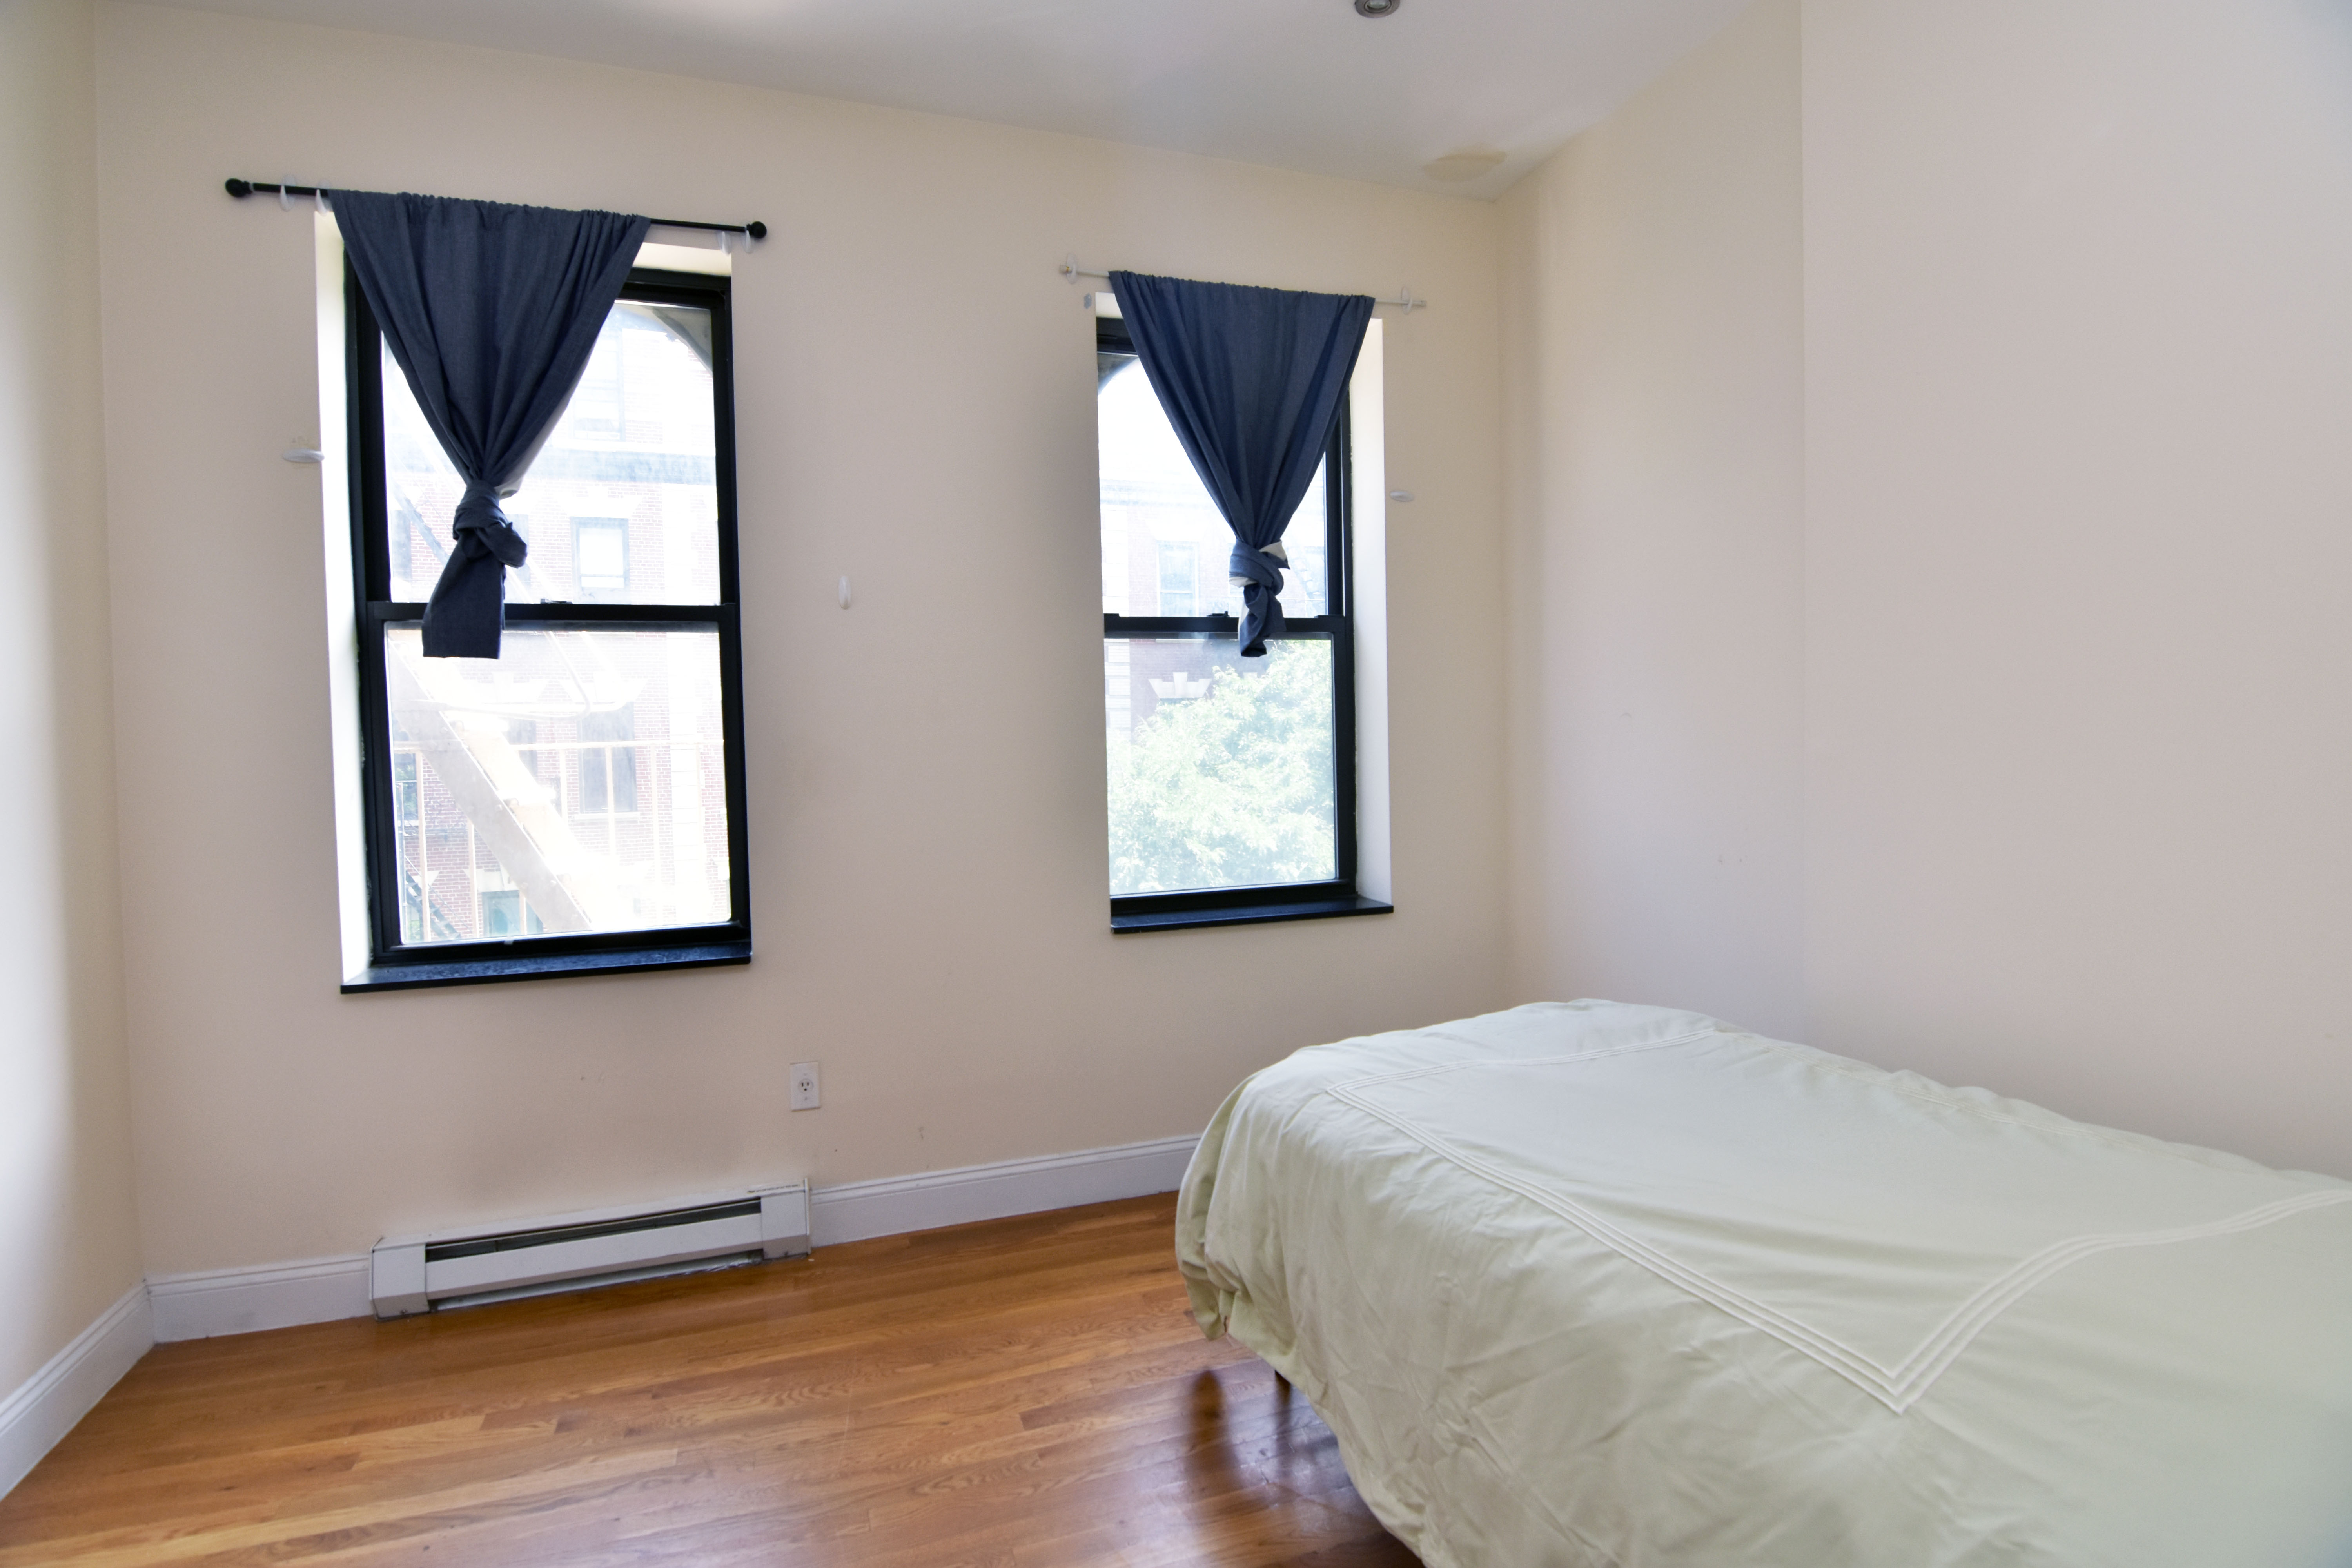 216 West 108th Street 3-R, Manhattan Valley, Upper Manhattan, NYC - 3 Bedrooms  
1 Bathrooms  
4 Rooms - 